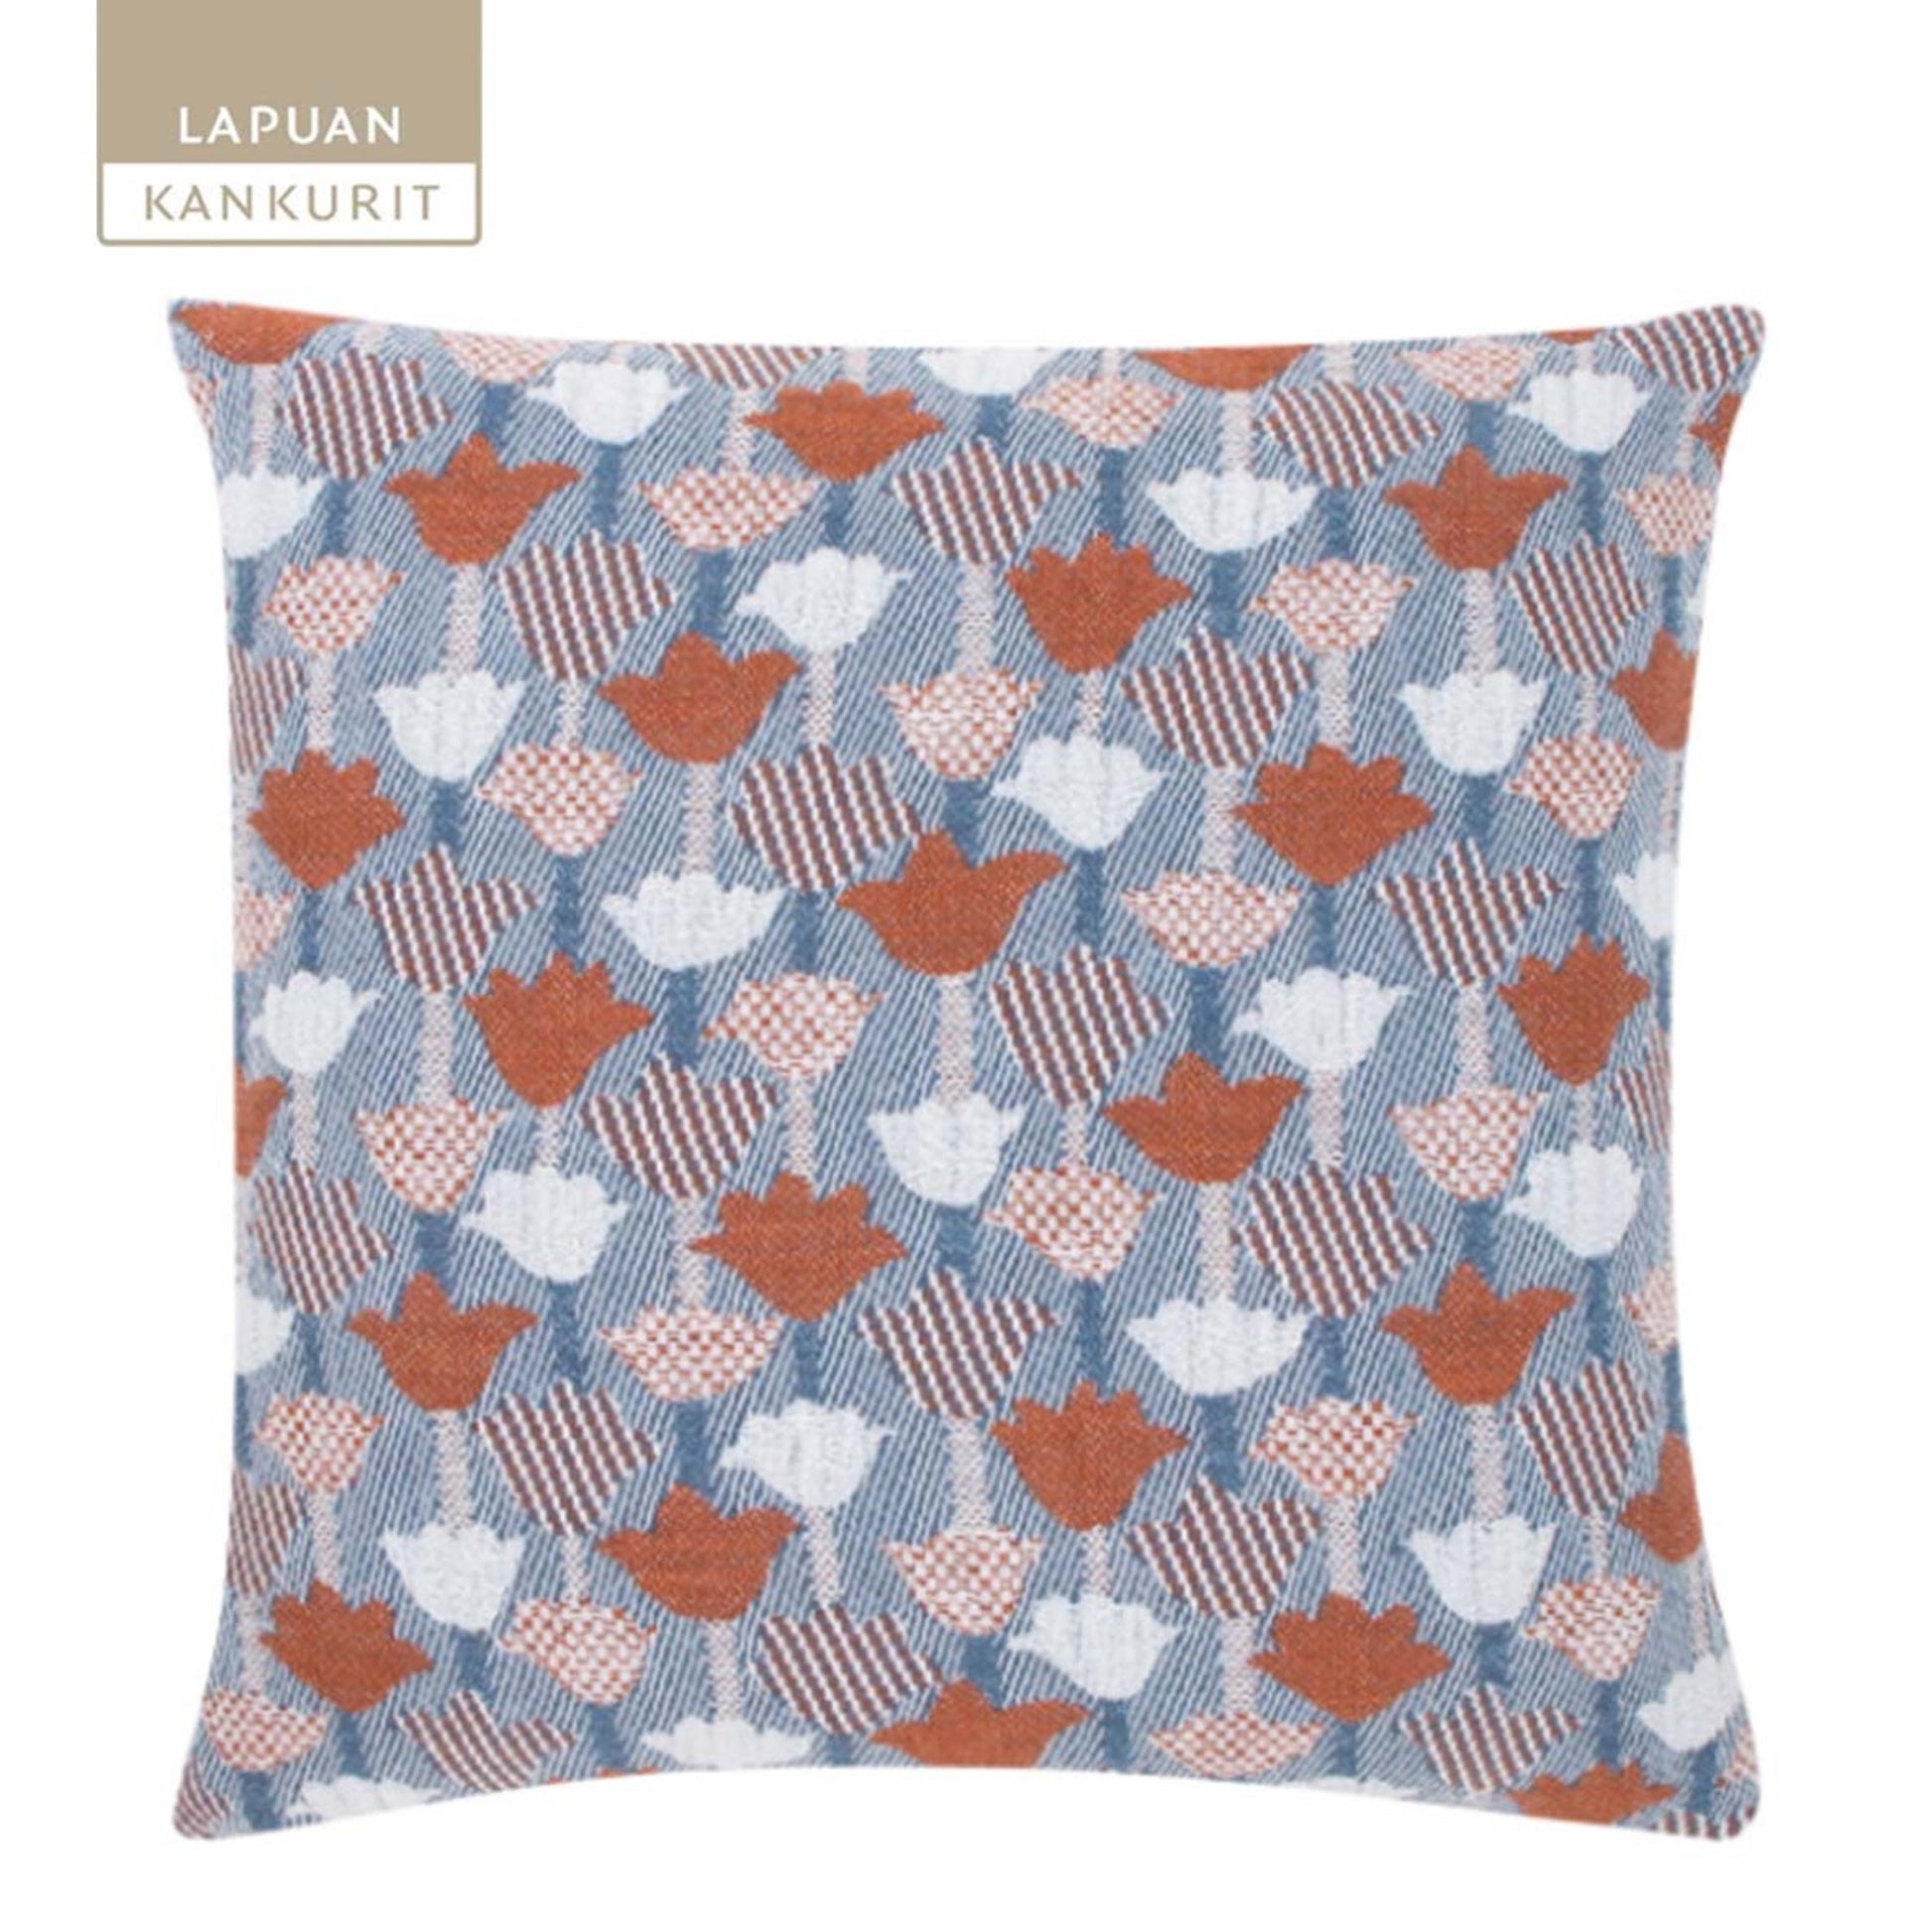 LAPUAN KANKURIT Tulppaani Wool and Linen Cushion Cover, 45x45cm (4571954020417)